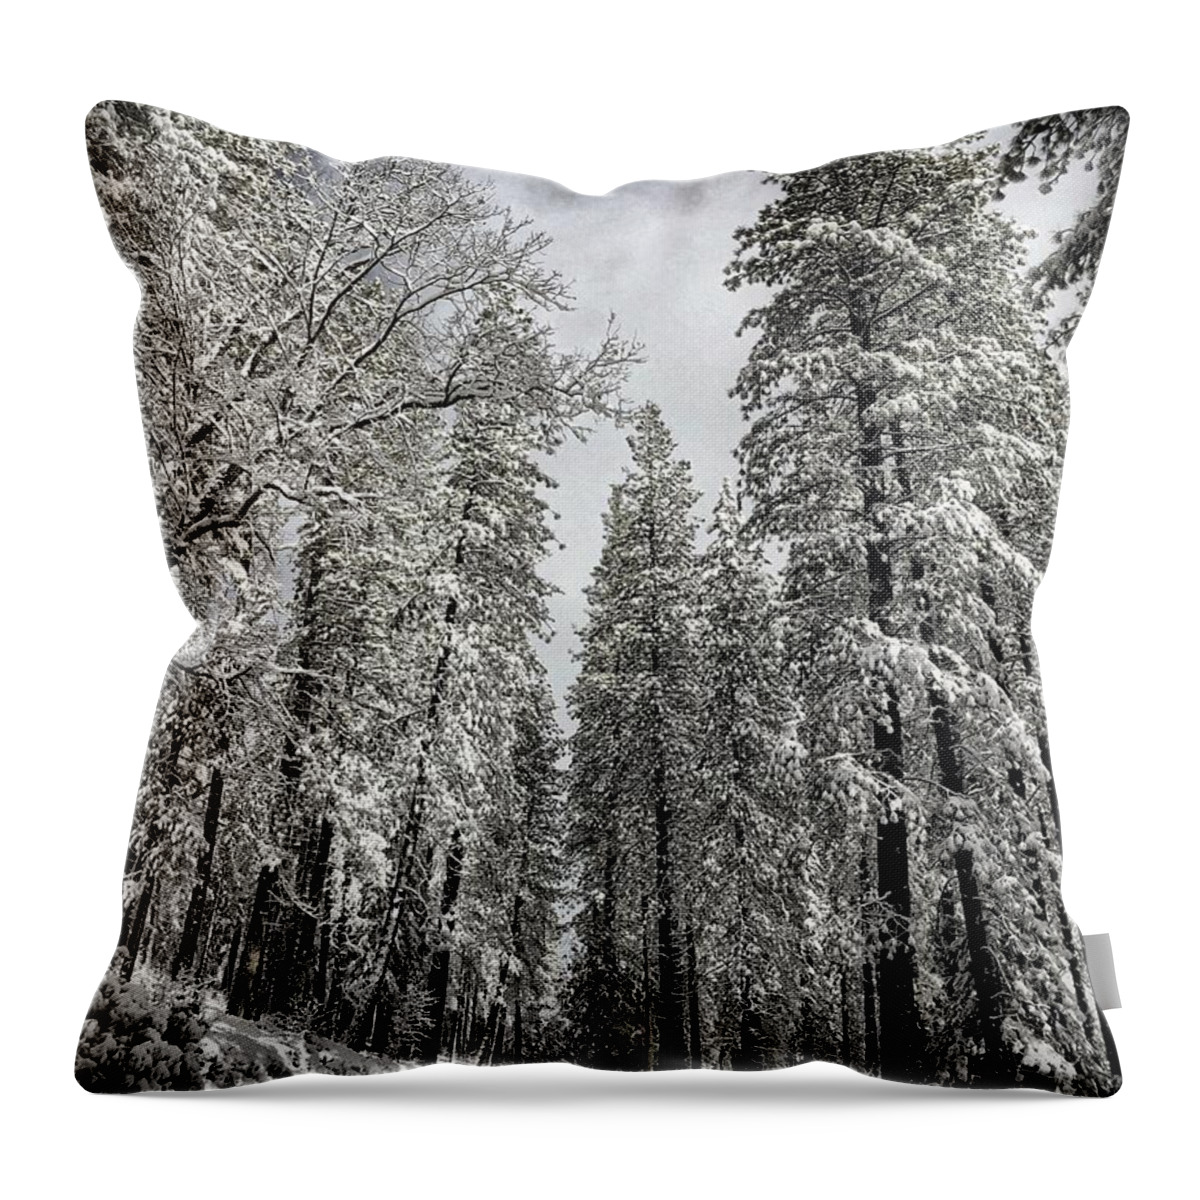 Snow Throw Pillow featuring the photograph Dashing Through the Snow by Steph Gabler